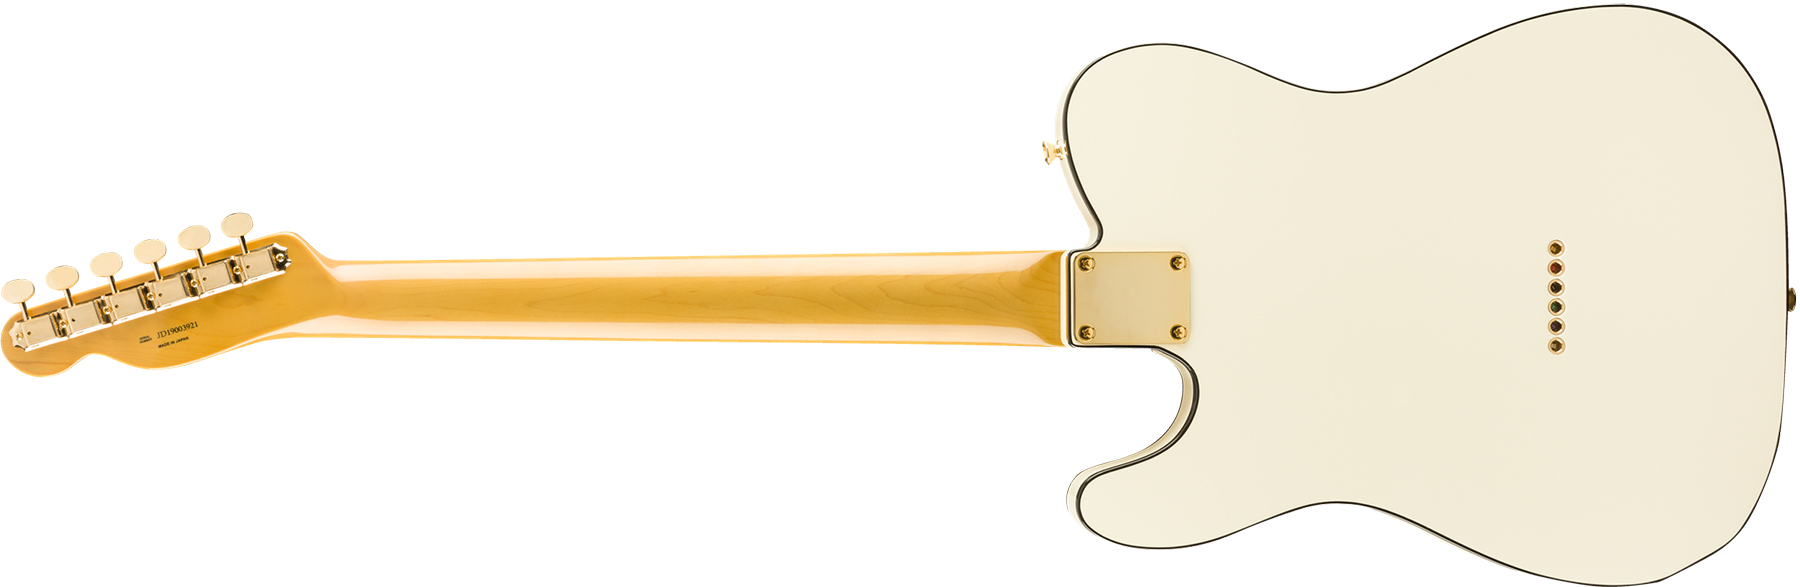 Fender Tele Daybreak Ltd 2019 Japon Gh Rw - Olympic White - Guitarra eléctrica con forma de tel - Variation 1